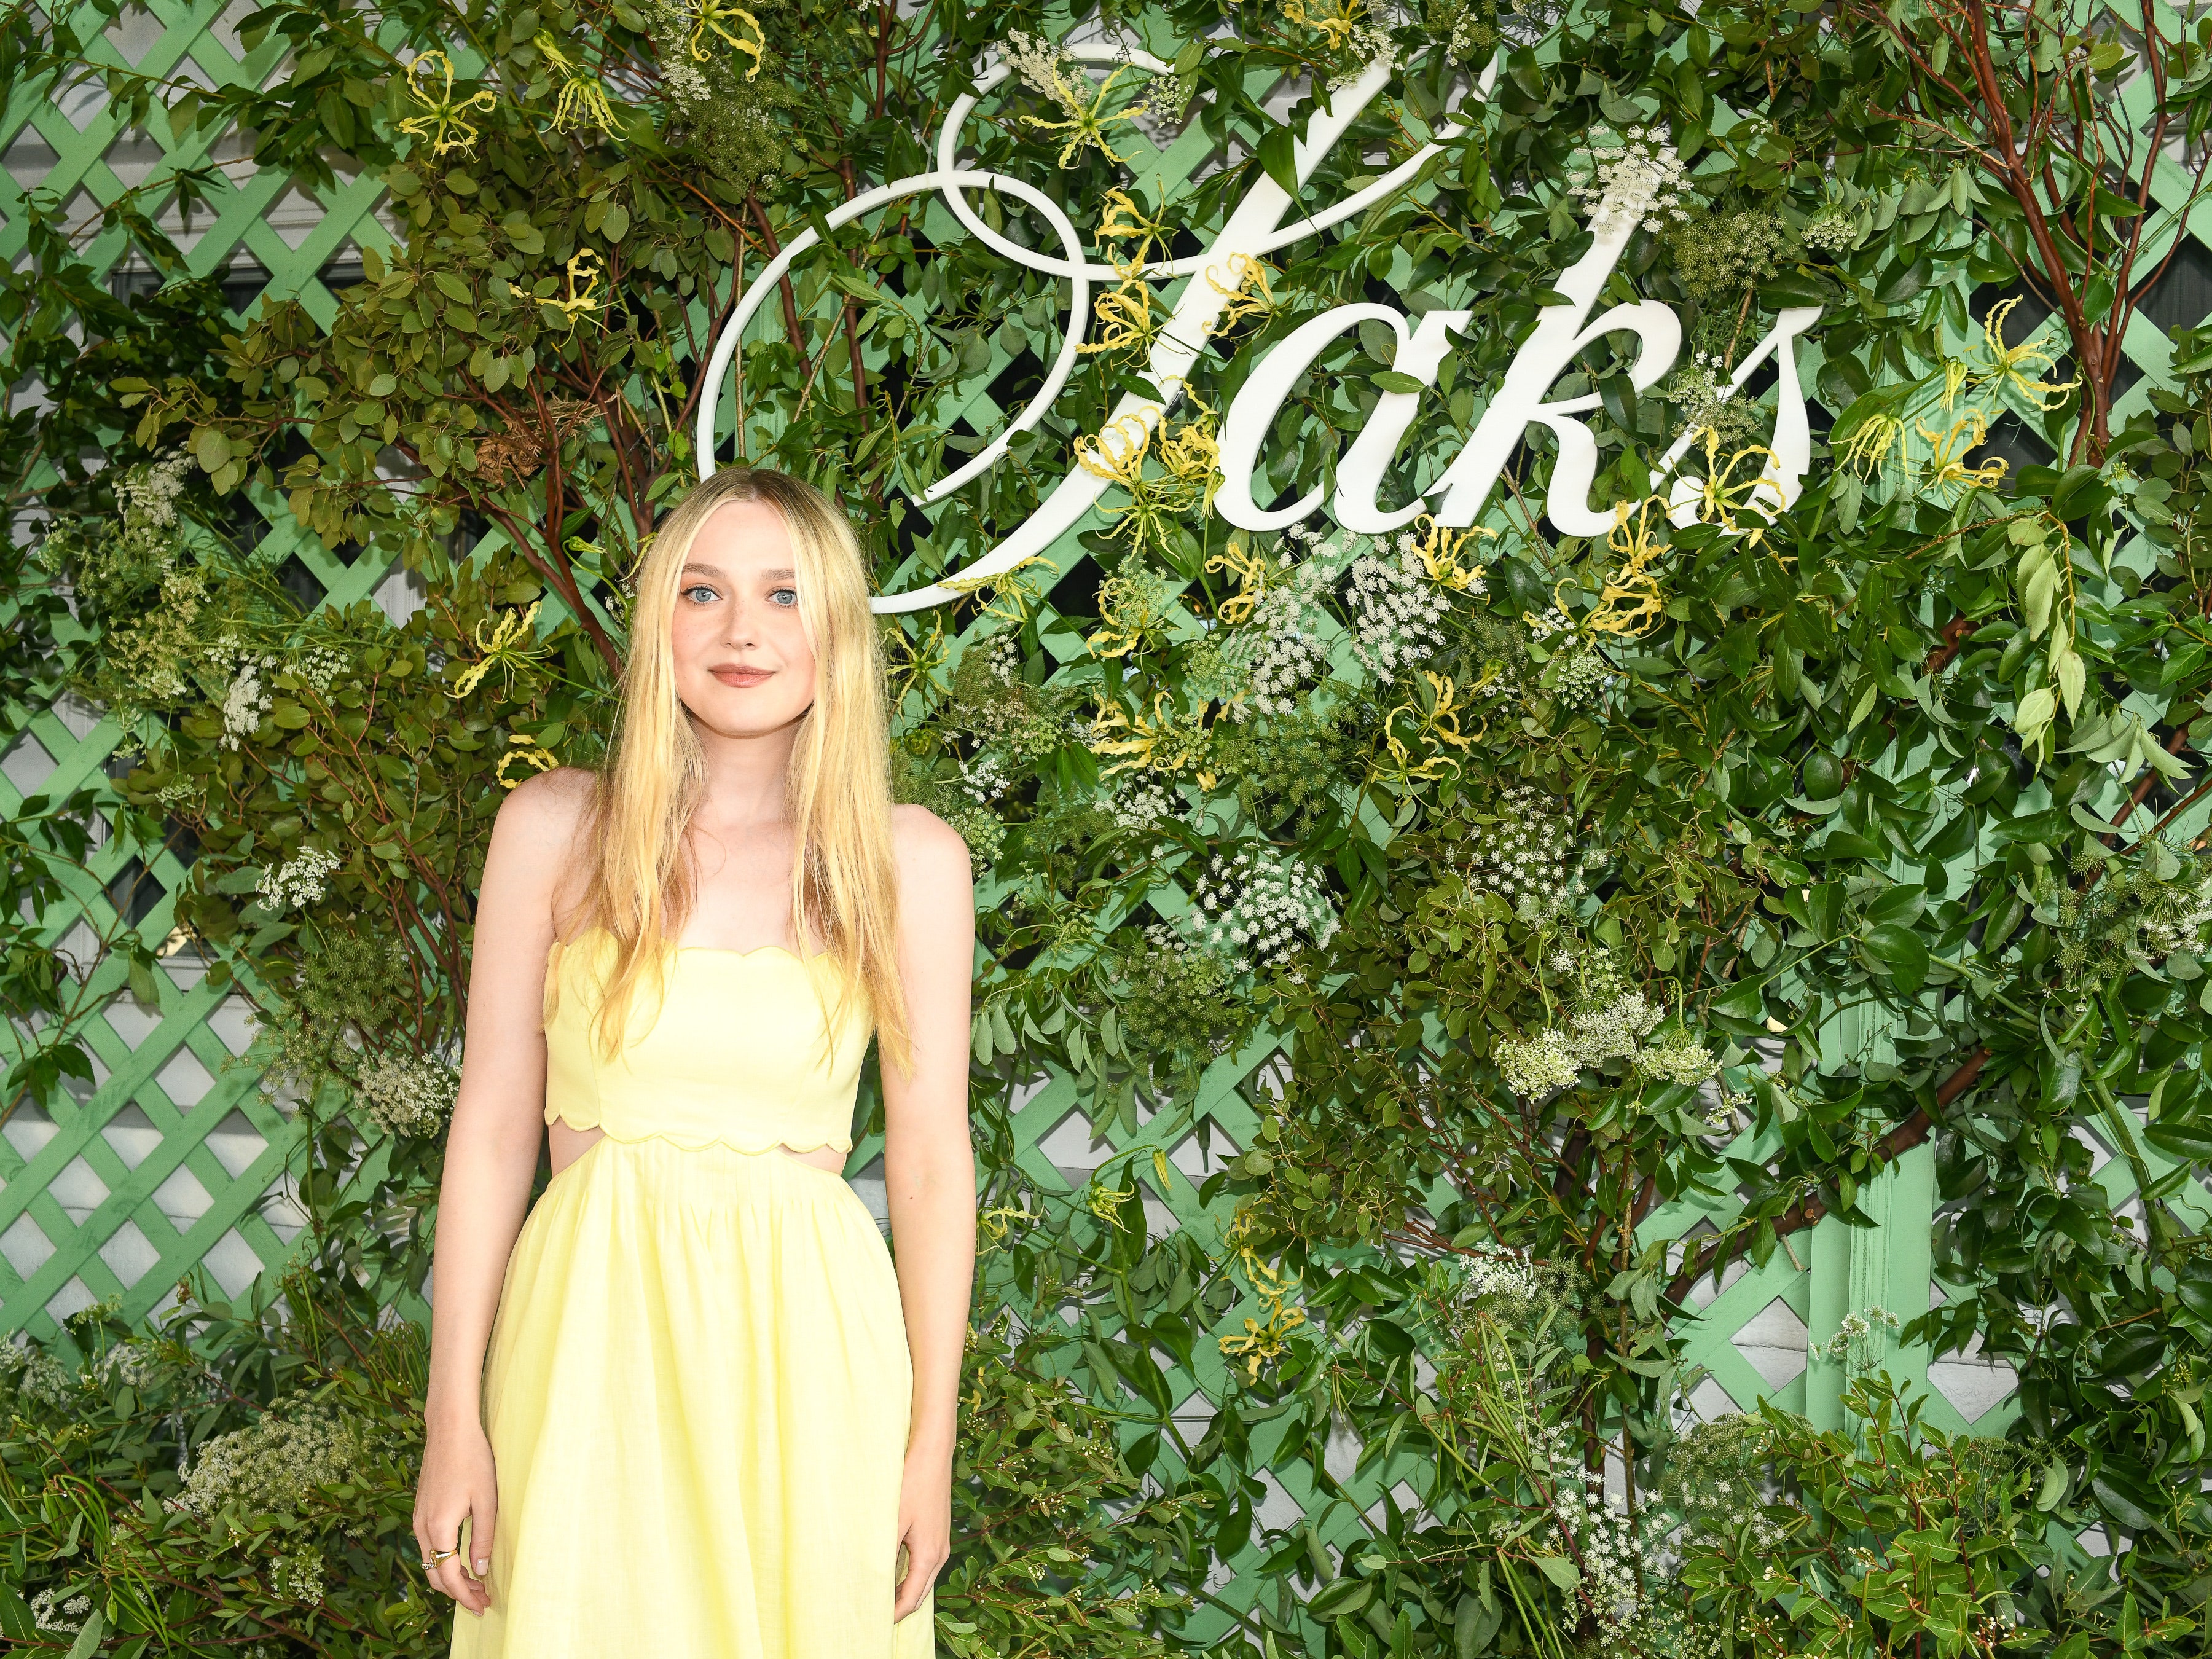 Dakota Fanning and Saks Hosted a Stylish, S’Mores-Filled Summer Soirée in Sag Harbor